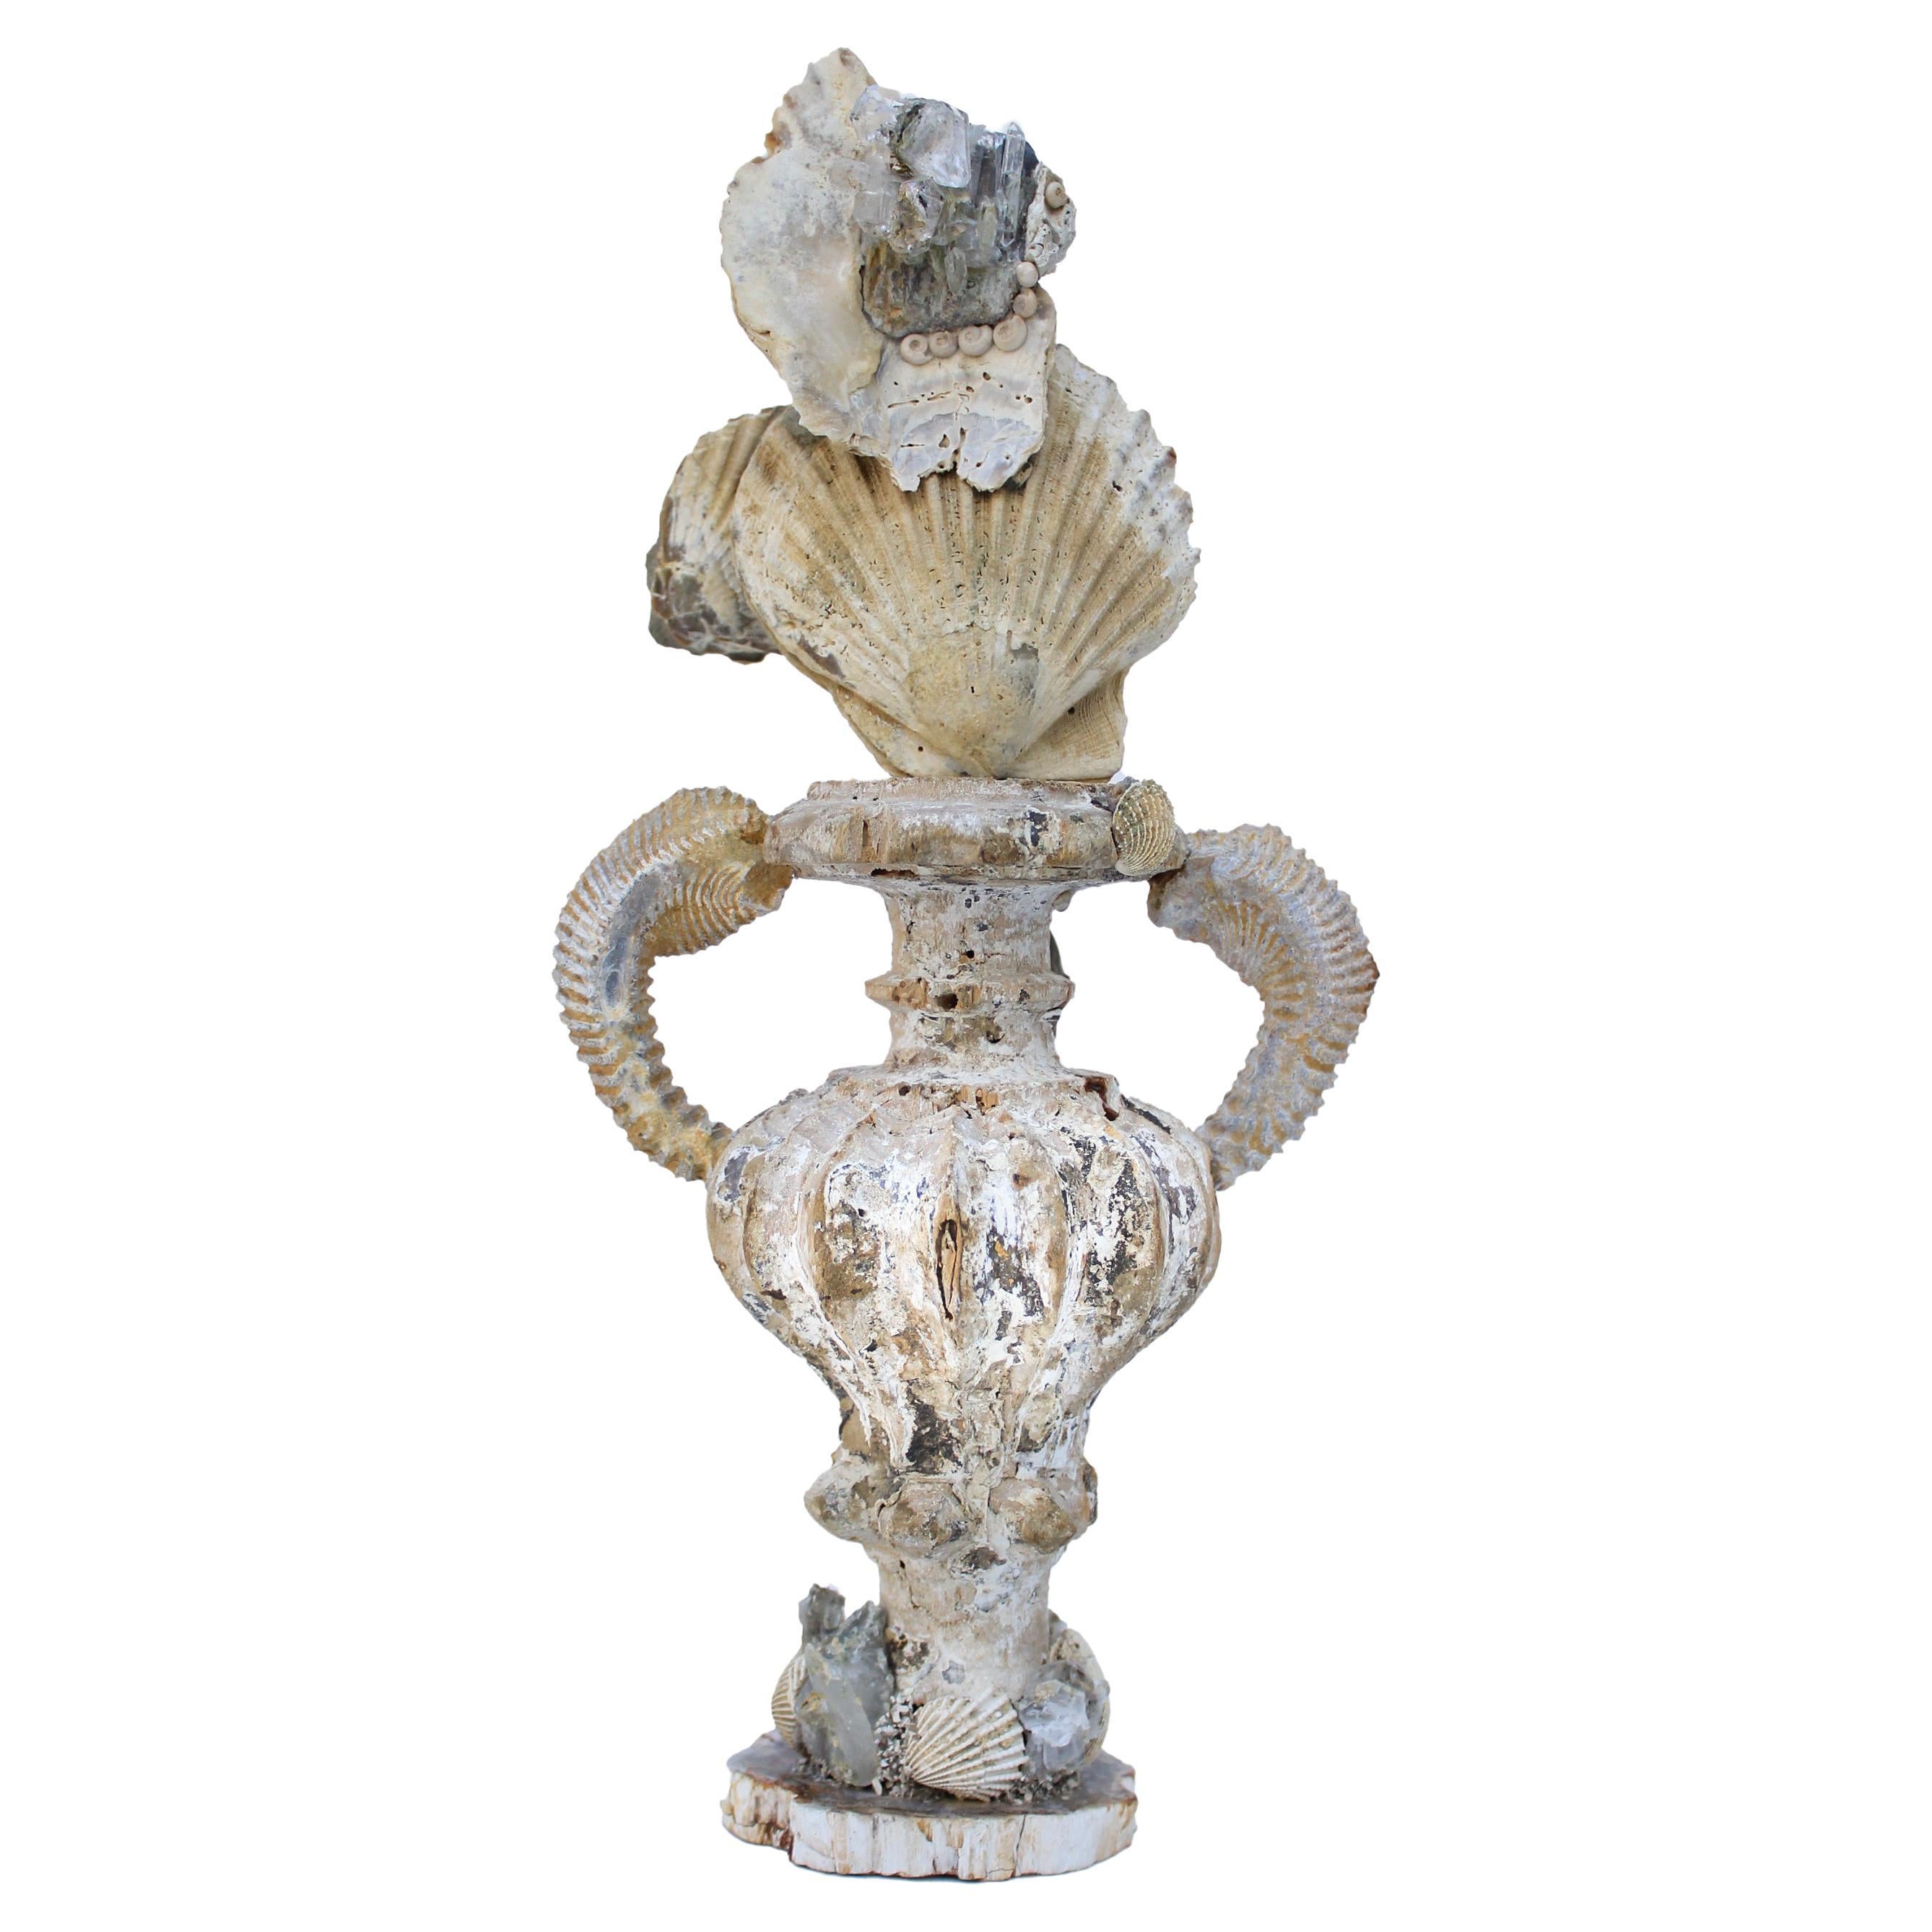 Sculptural 17-18th Century Italian Vase with Chesapecten Shells & Faden Crystals